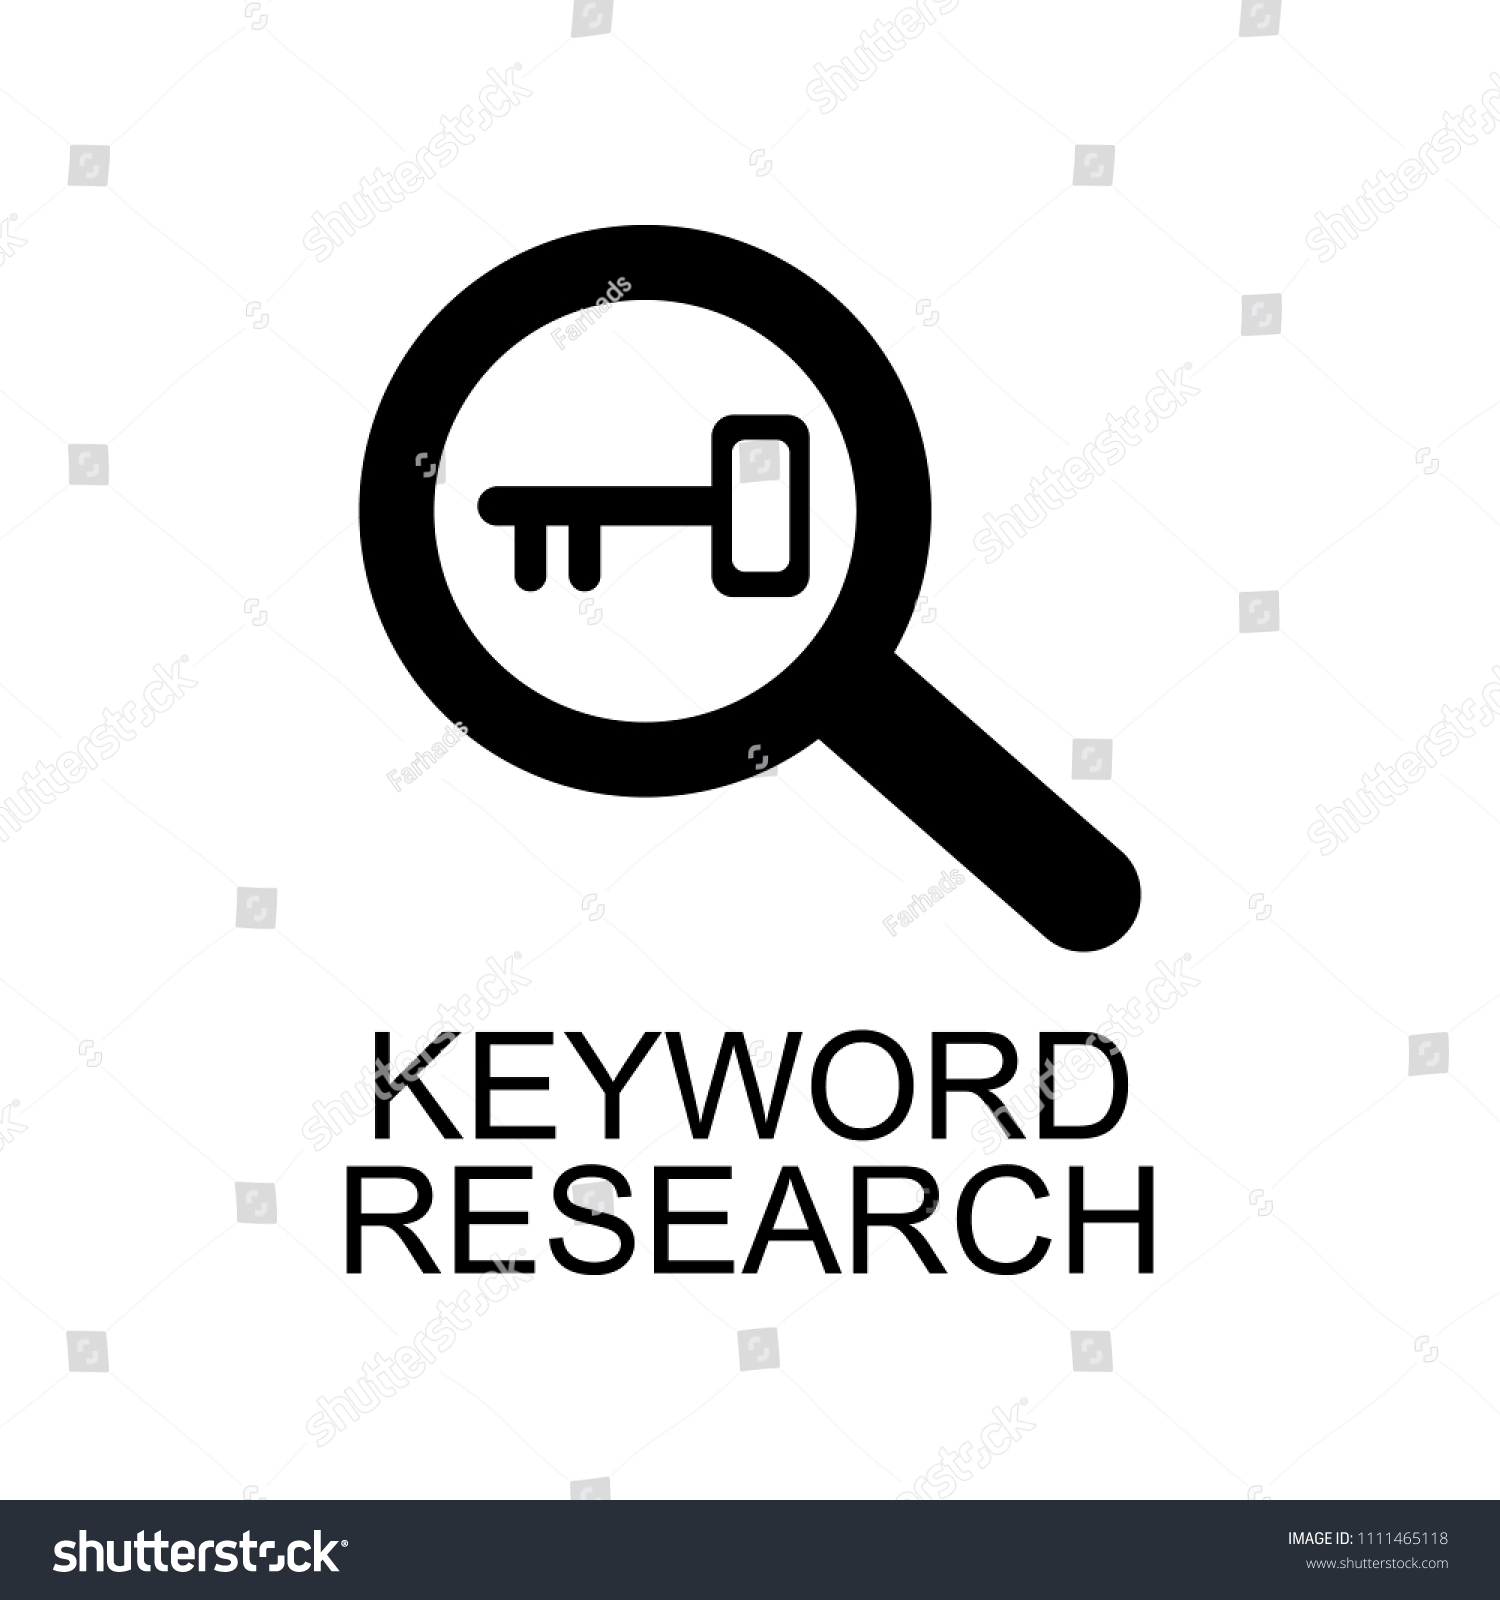 https www shutterstock com image vector keyword research icon element seo development 1111465118